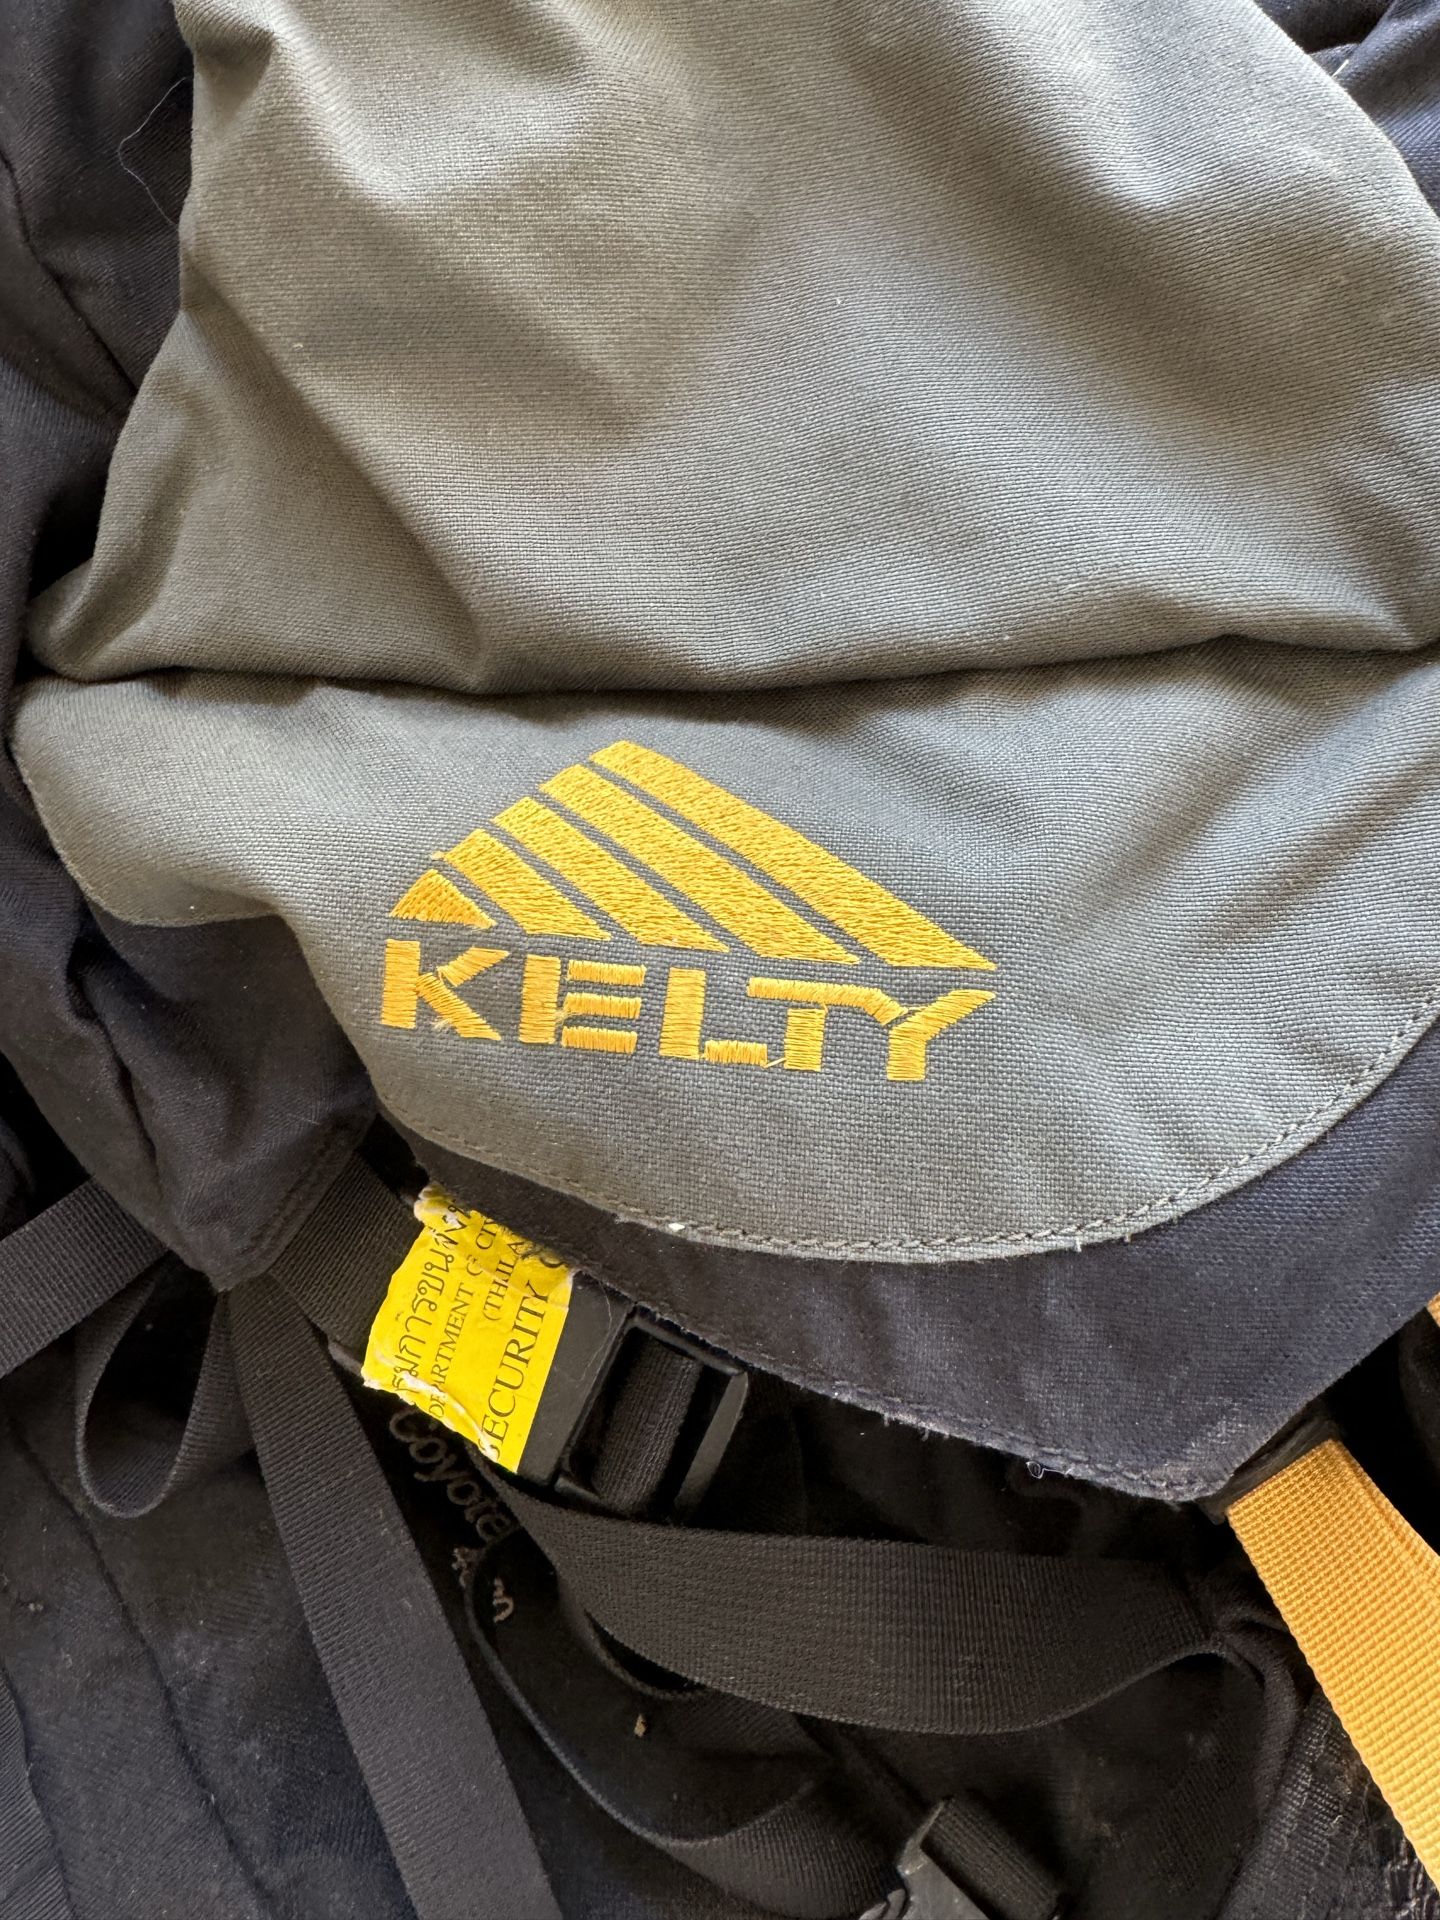 Kelty Coyote 4500 Internal Frame Backpack